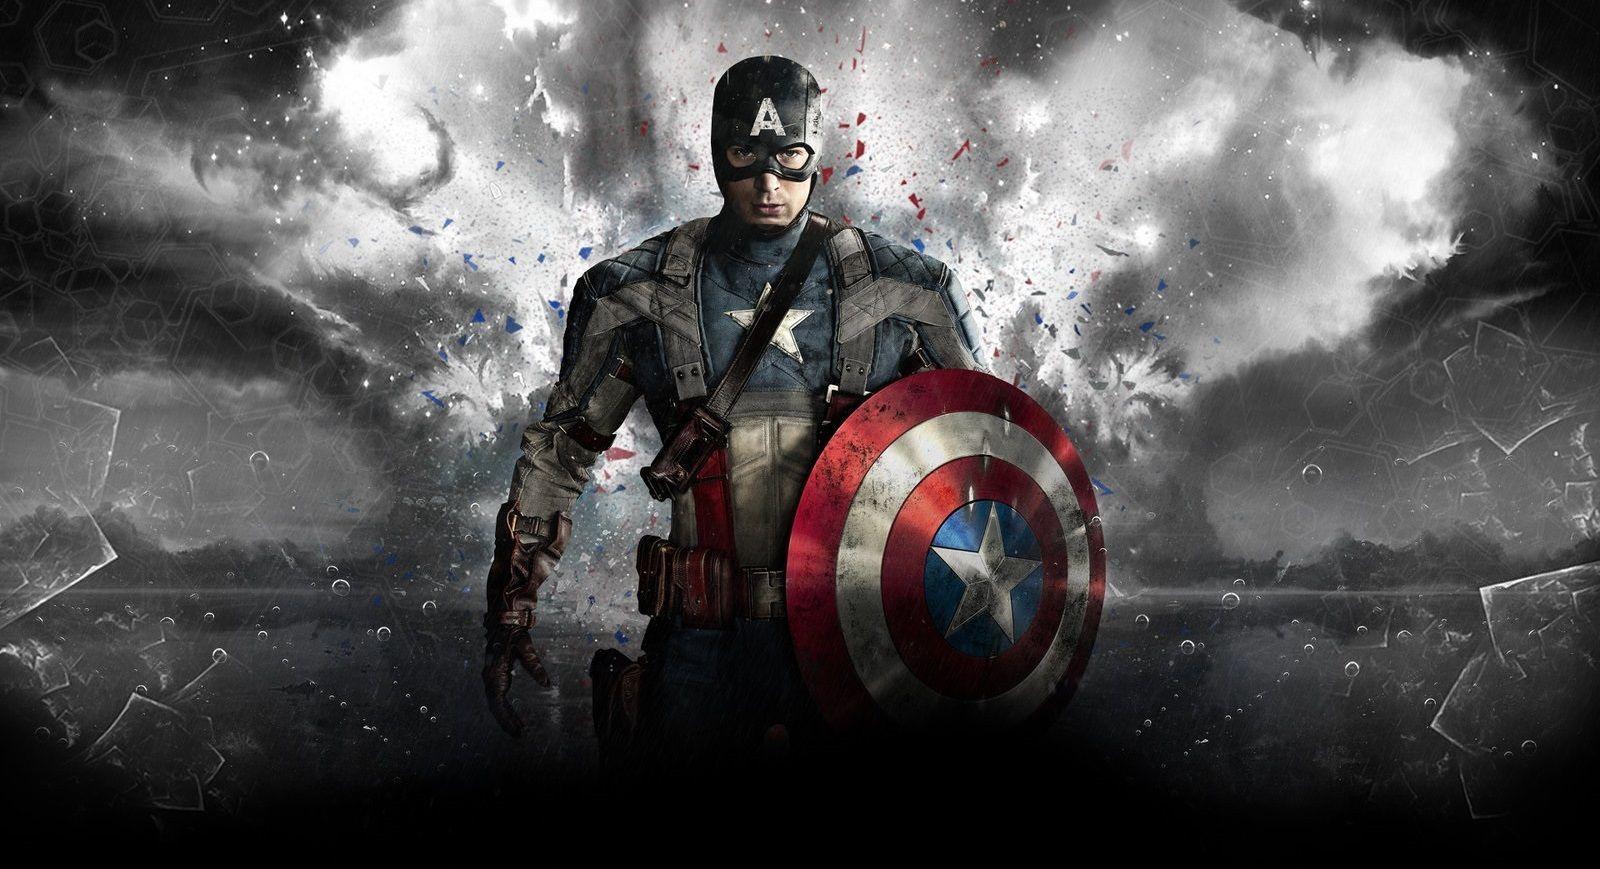 Captain America Wallpaper Free Download. Captain america wallpaper, HD wallpaper for pc, Avengers wallpaper